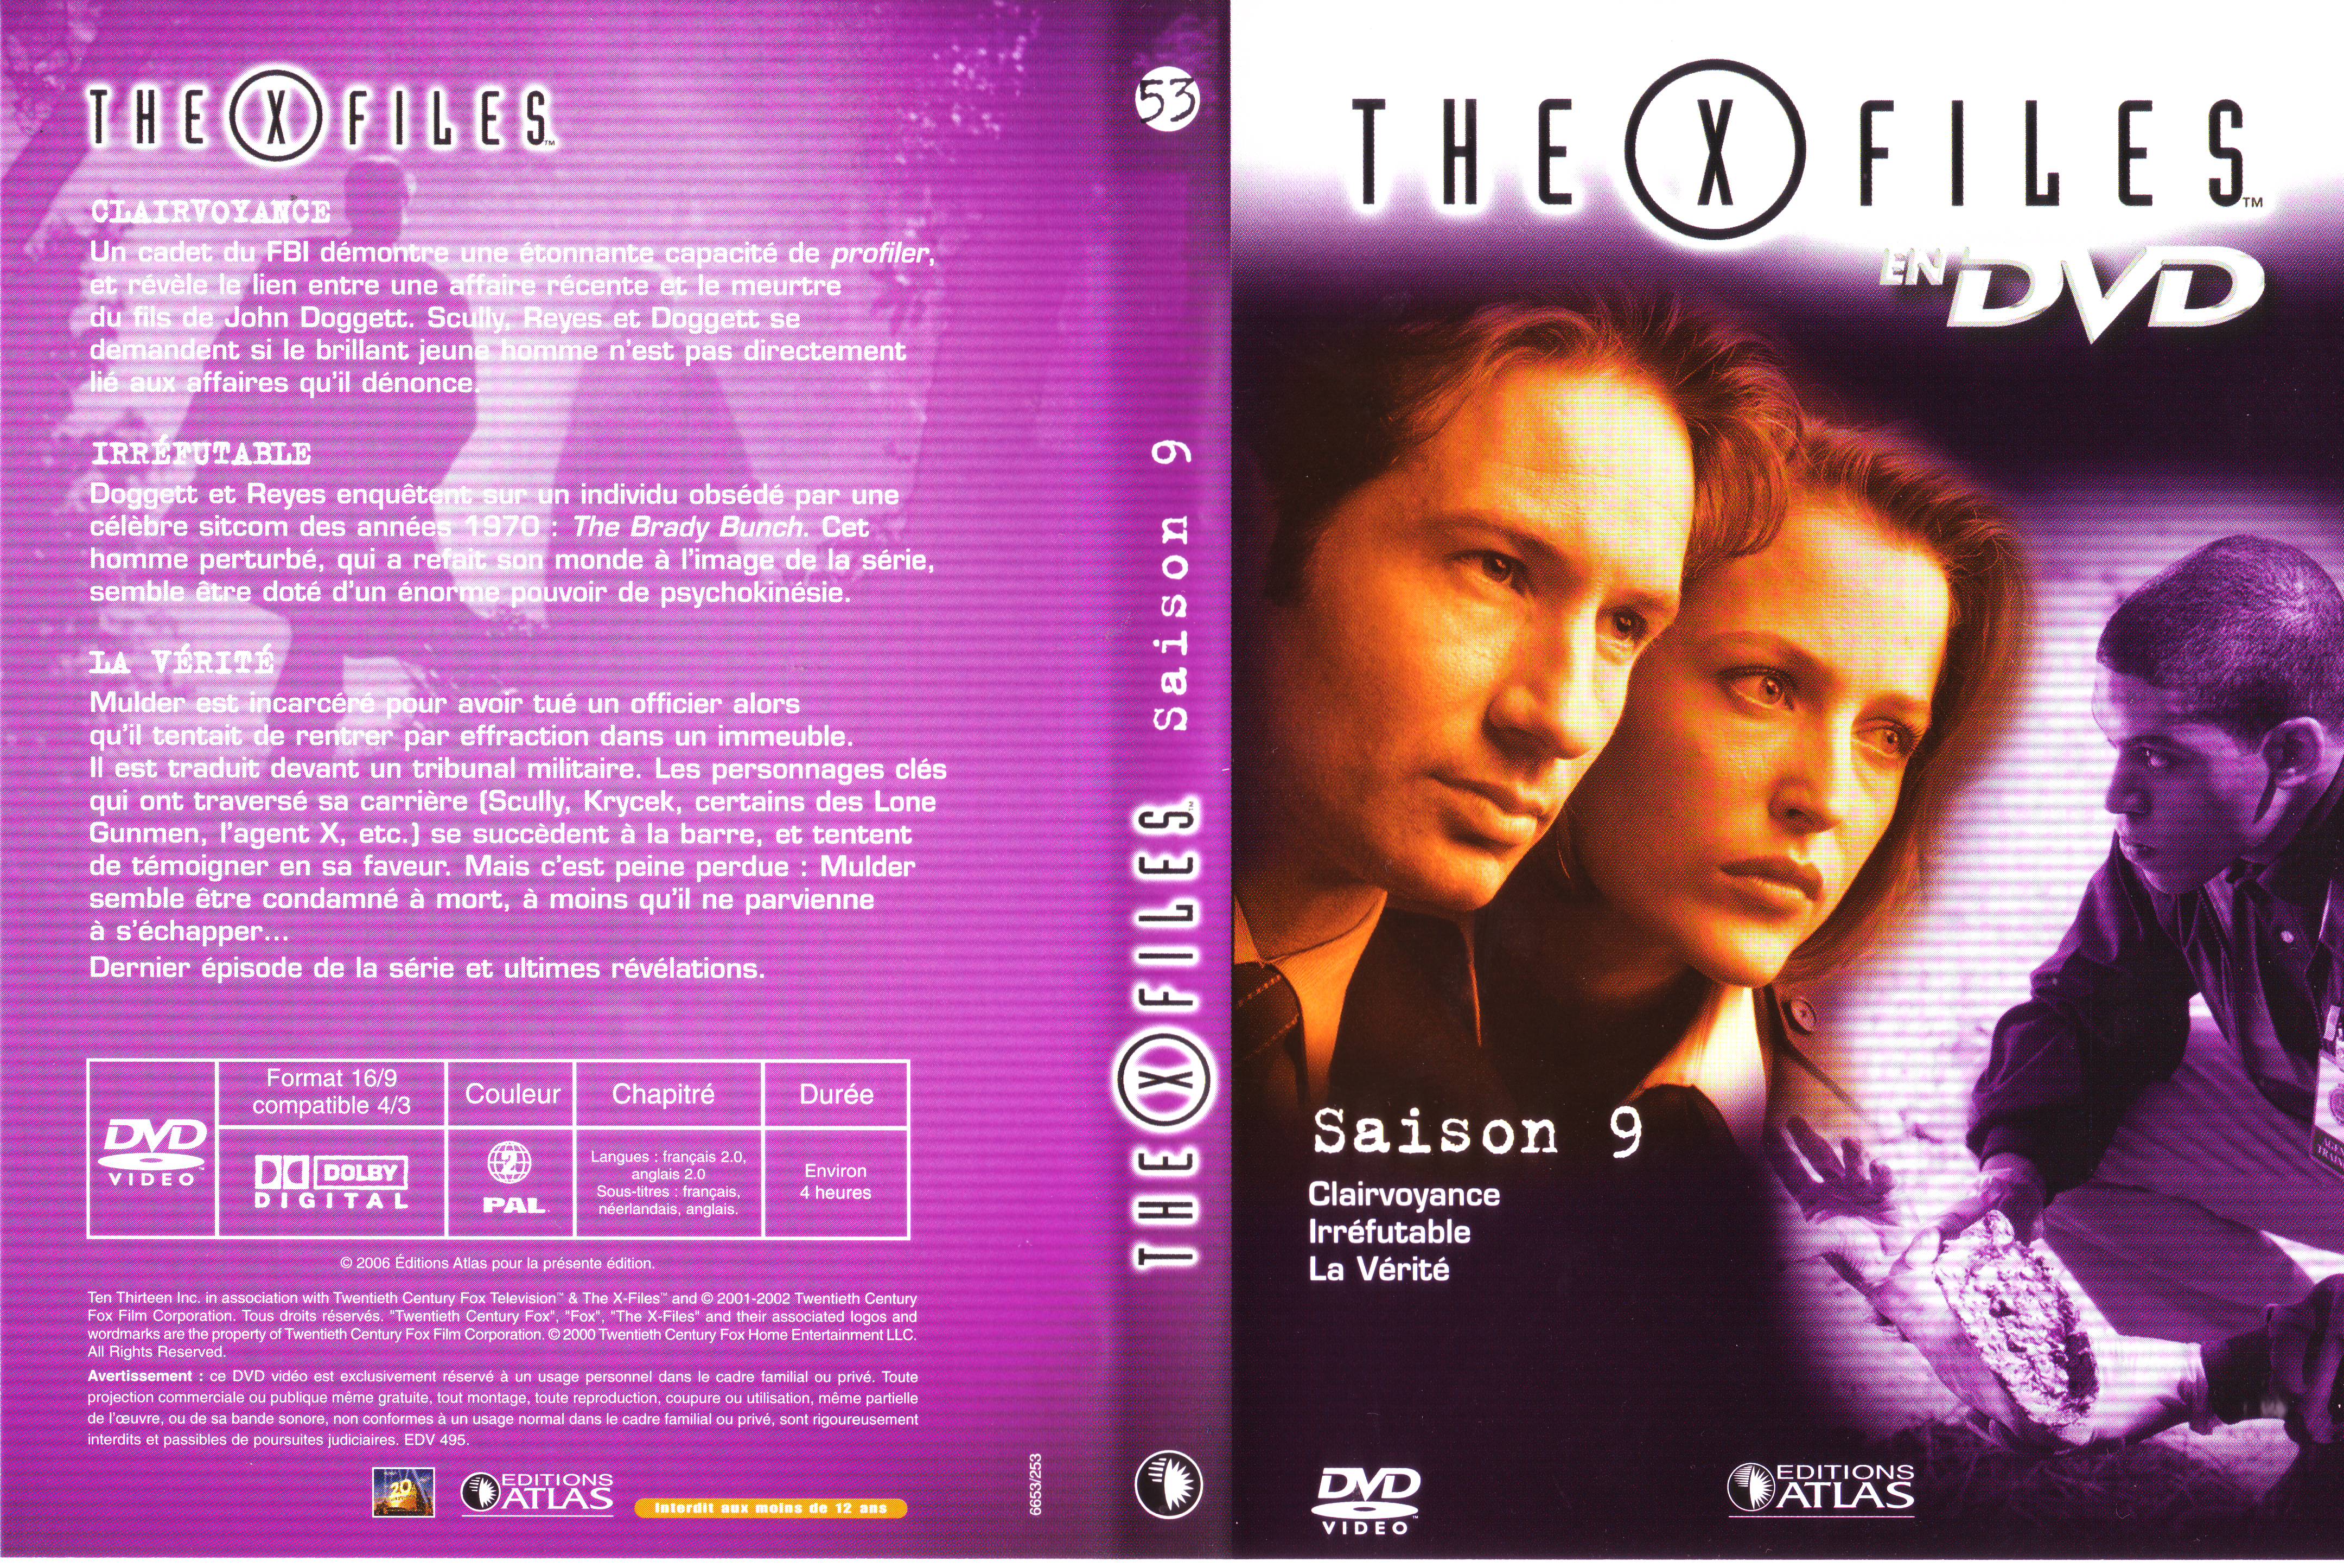 Jaquette DVD X Files saison 9 DVD 53